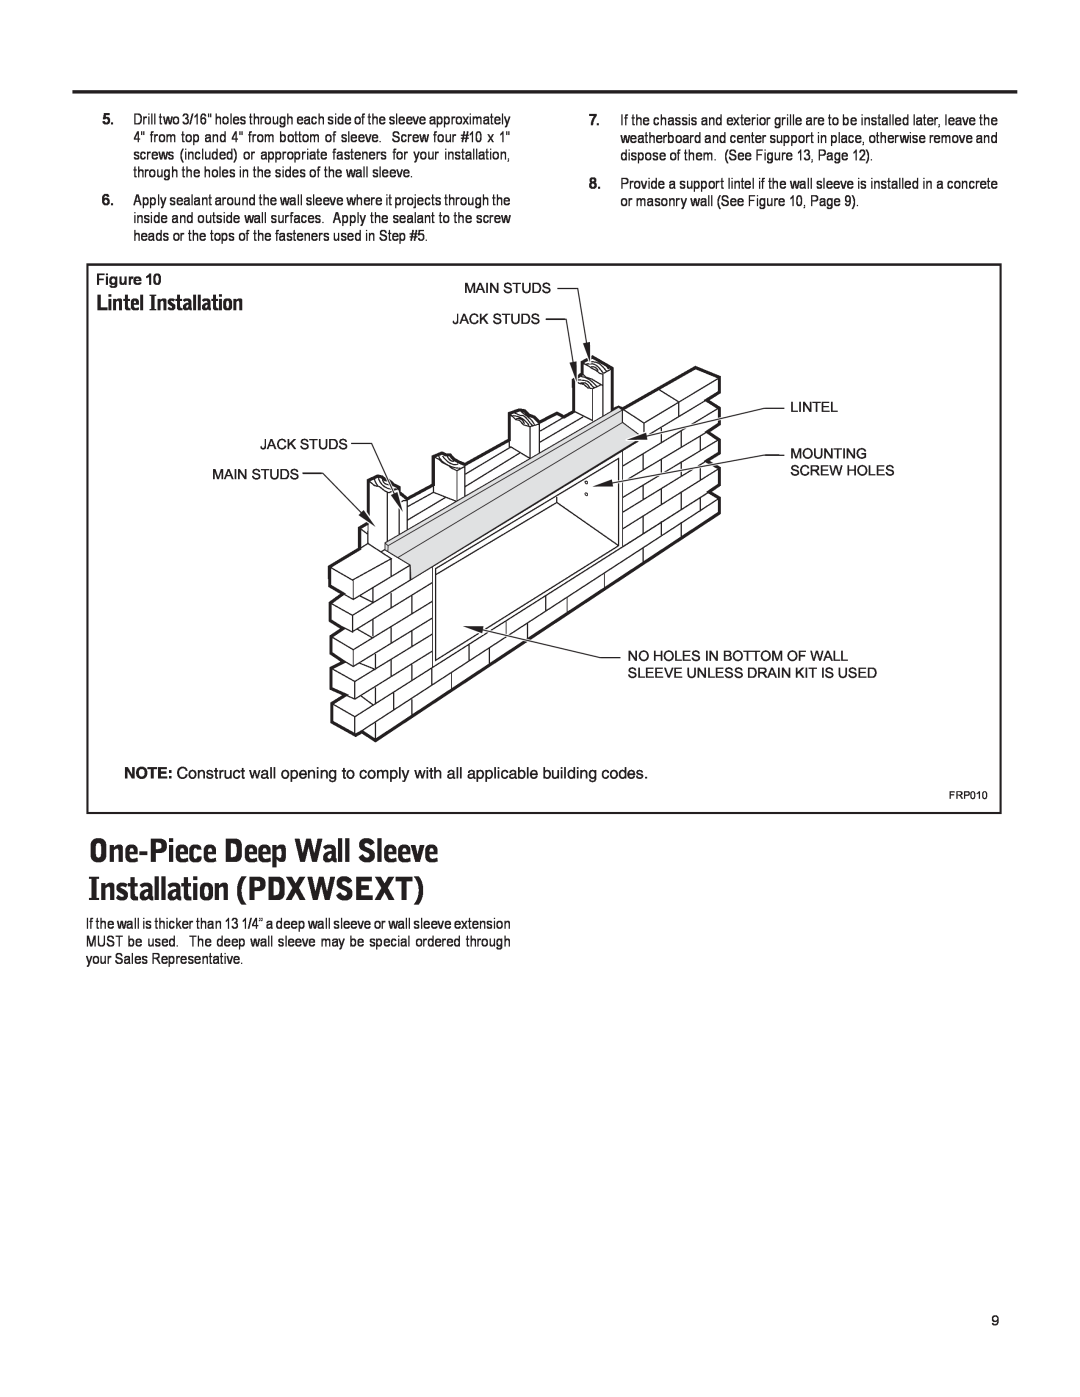 Friedrich 920-087-09 (12/10) operation manual One-PieceDeep Wall Sleeve Installation PDXWSEXT, Lintel Installation 